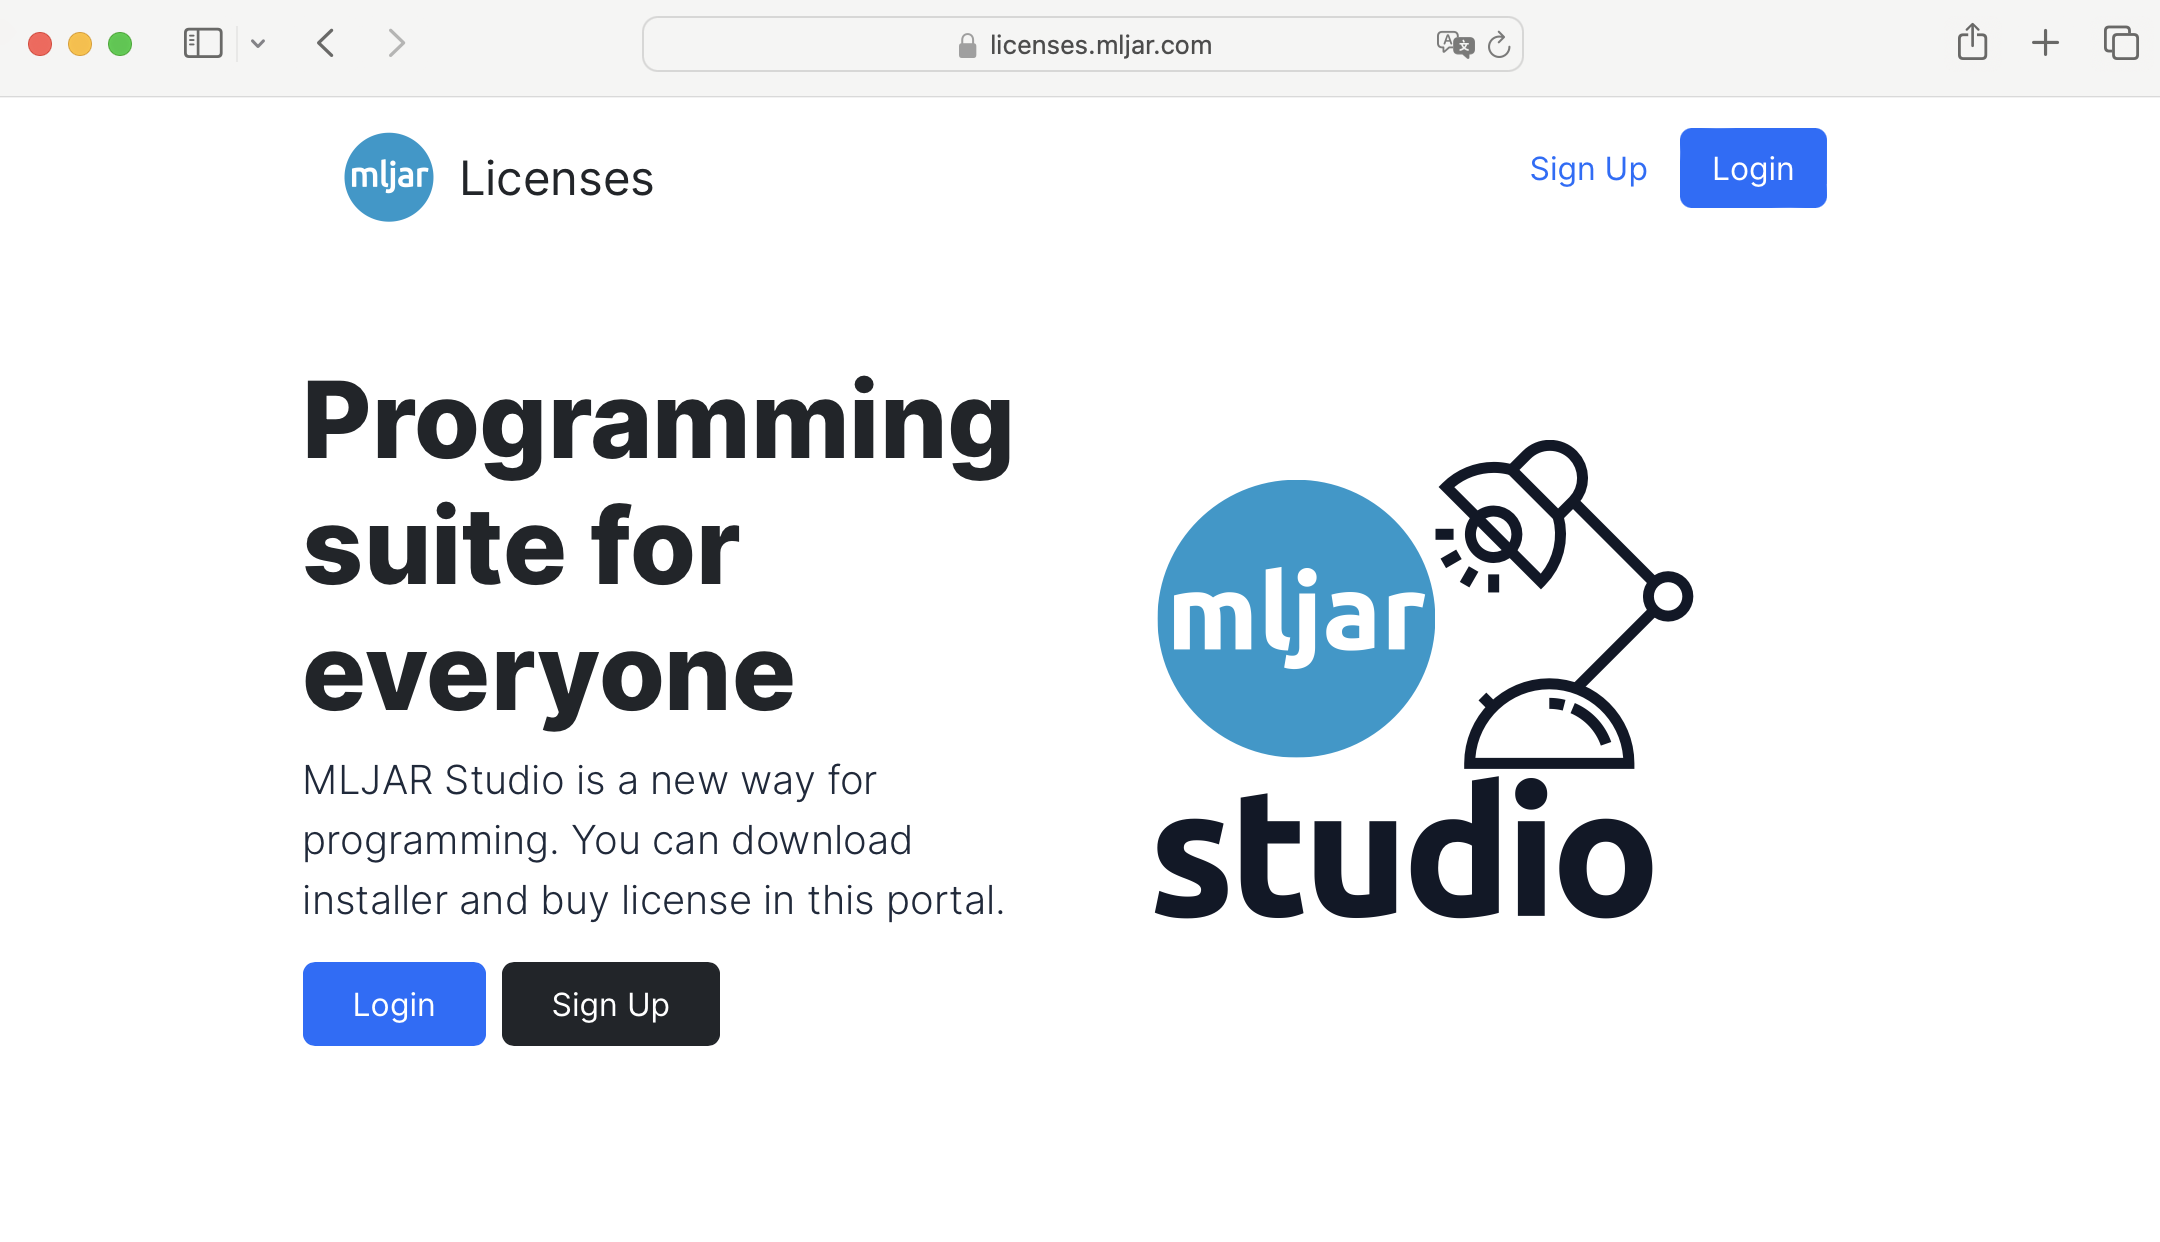 MLJAR Licenses portal